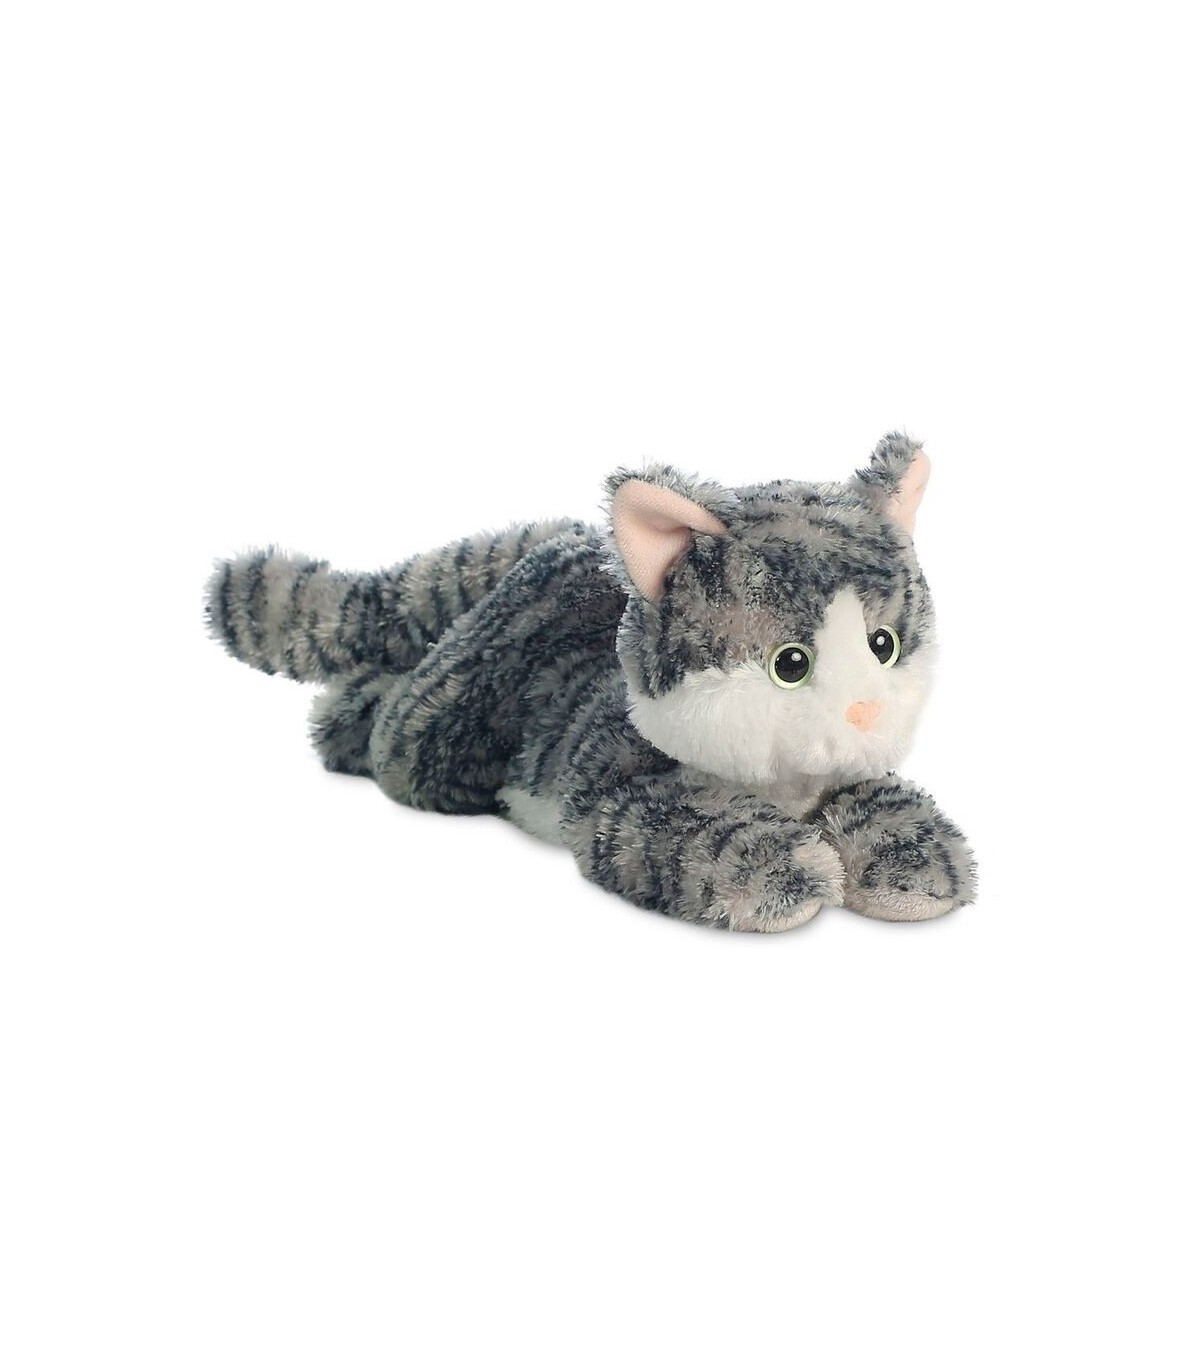 Peluche gato Gris de estilo realista y tamaño mini